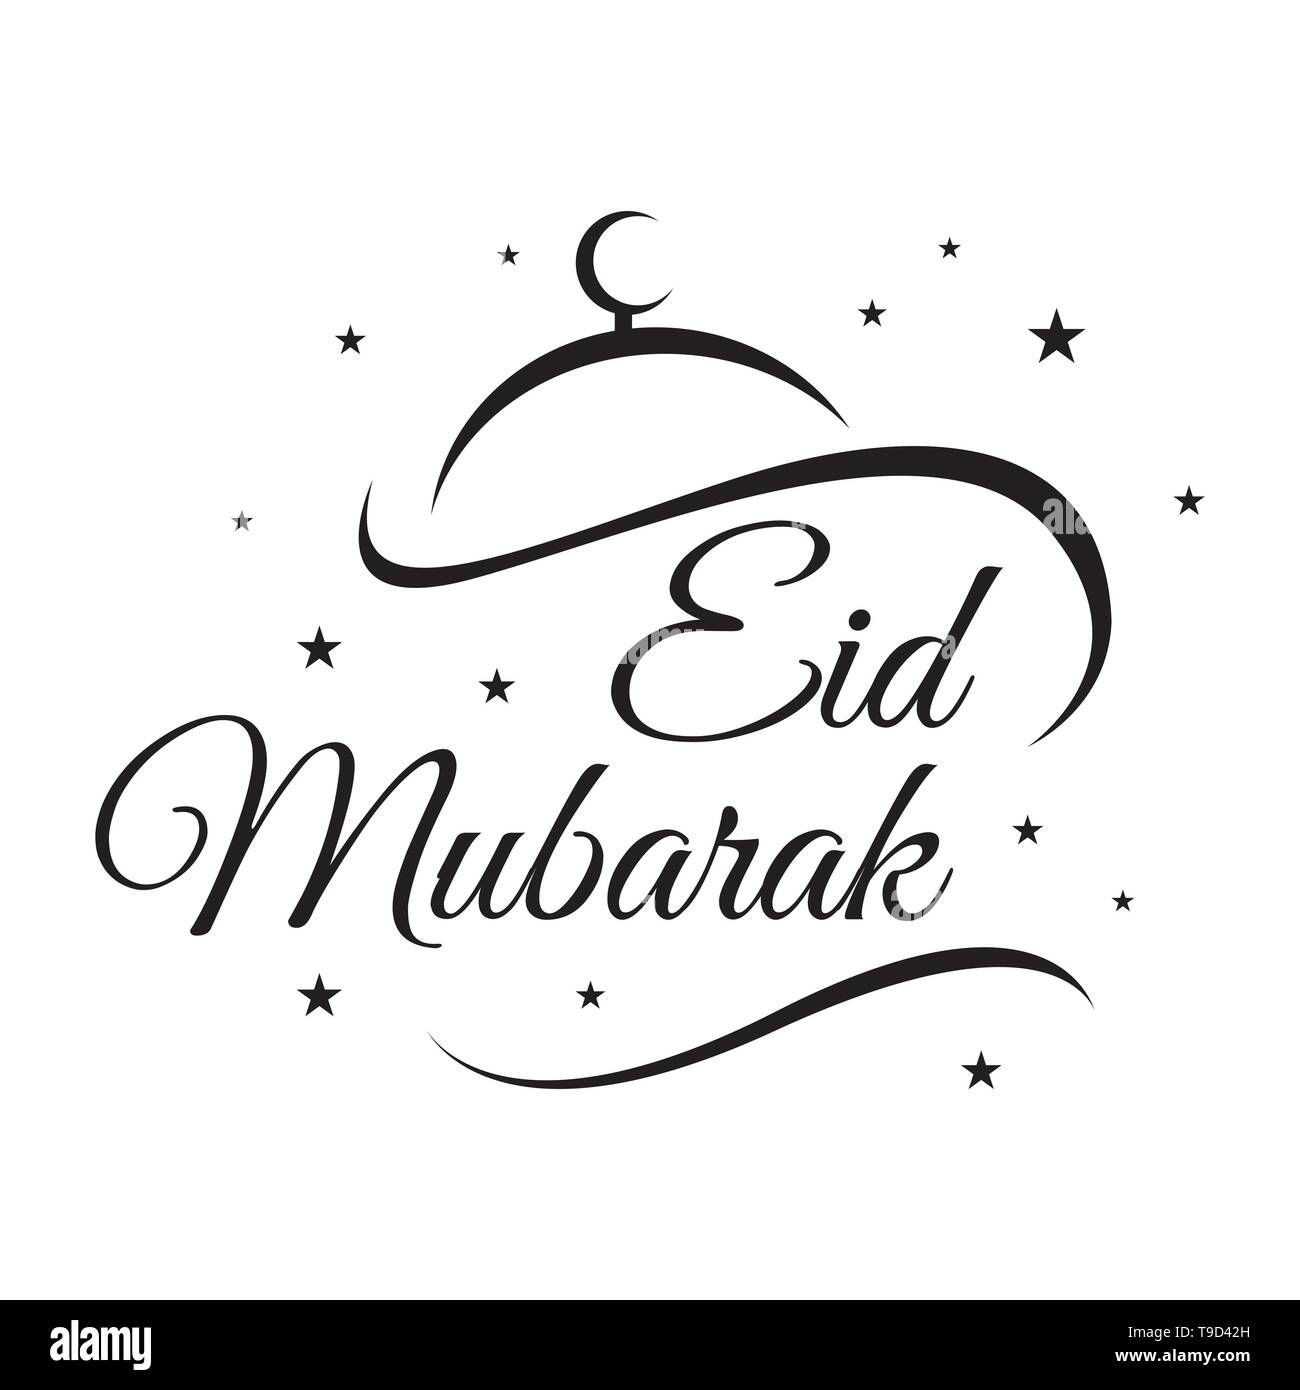 362289 2cxcitefun Eid Ul Adha Wallpapers 11 Jpg 1280 816 Eid